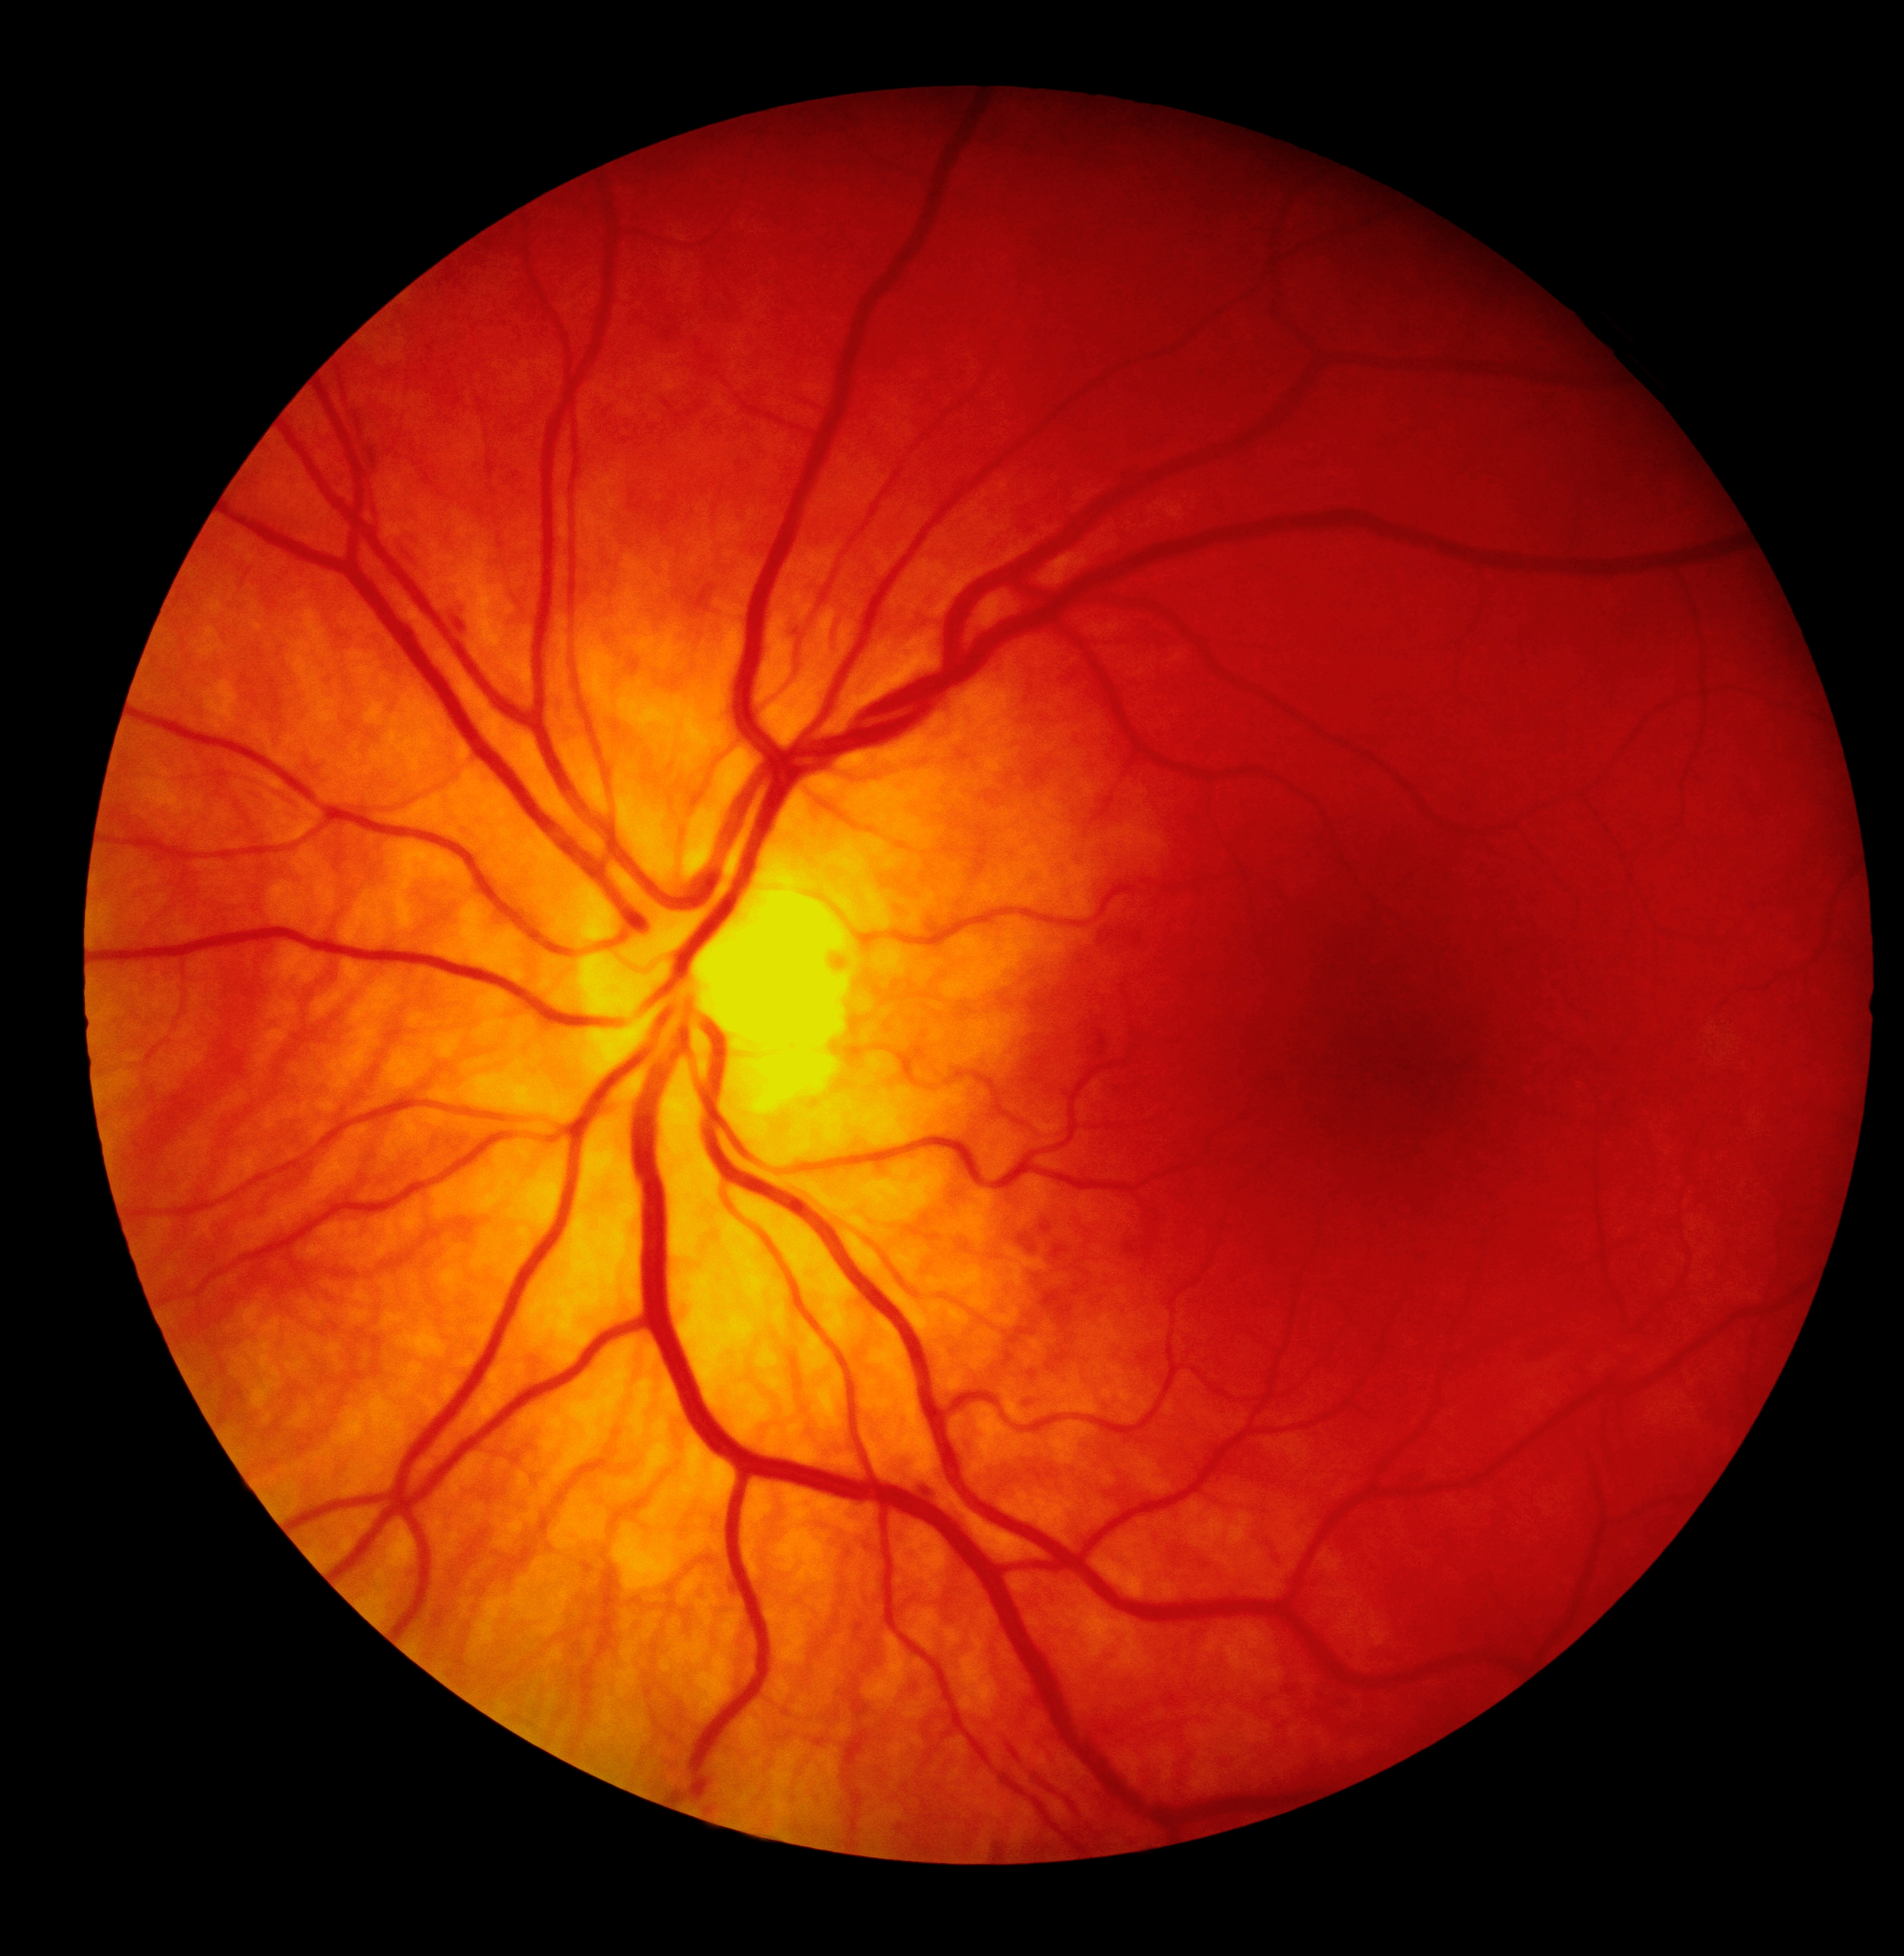 Image of retina (source: envato)